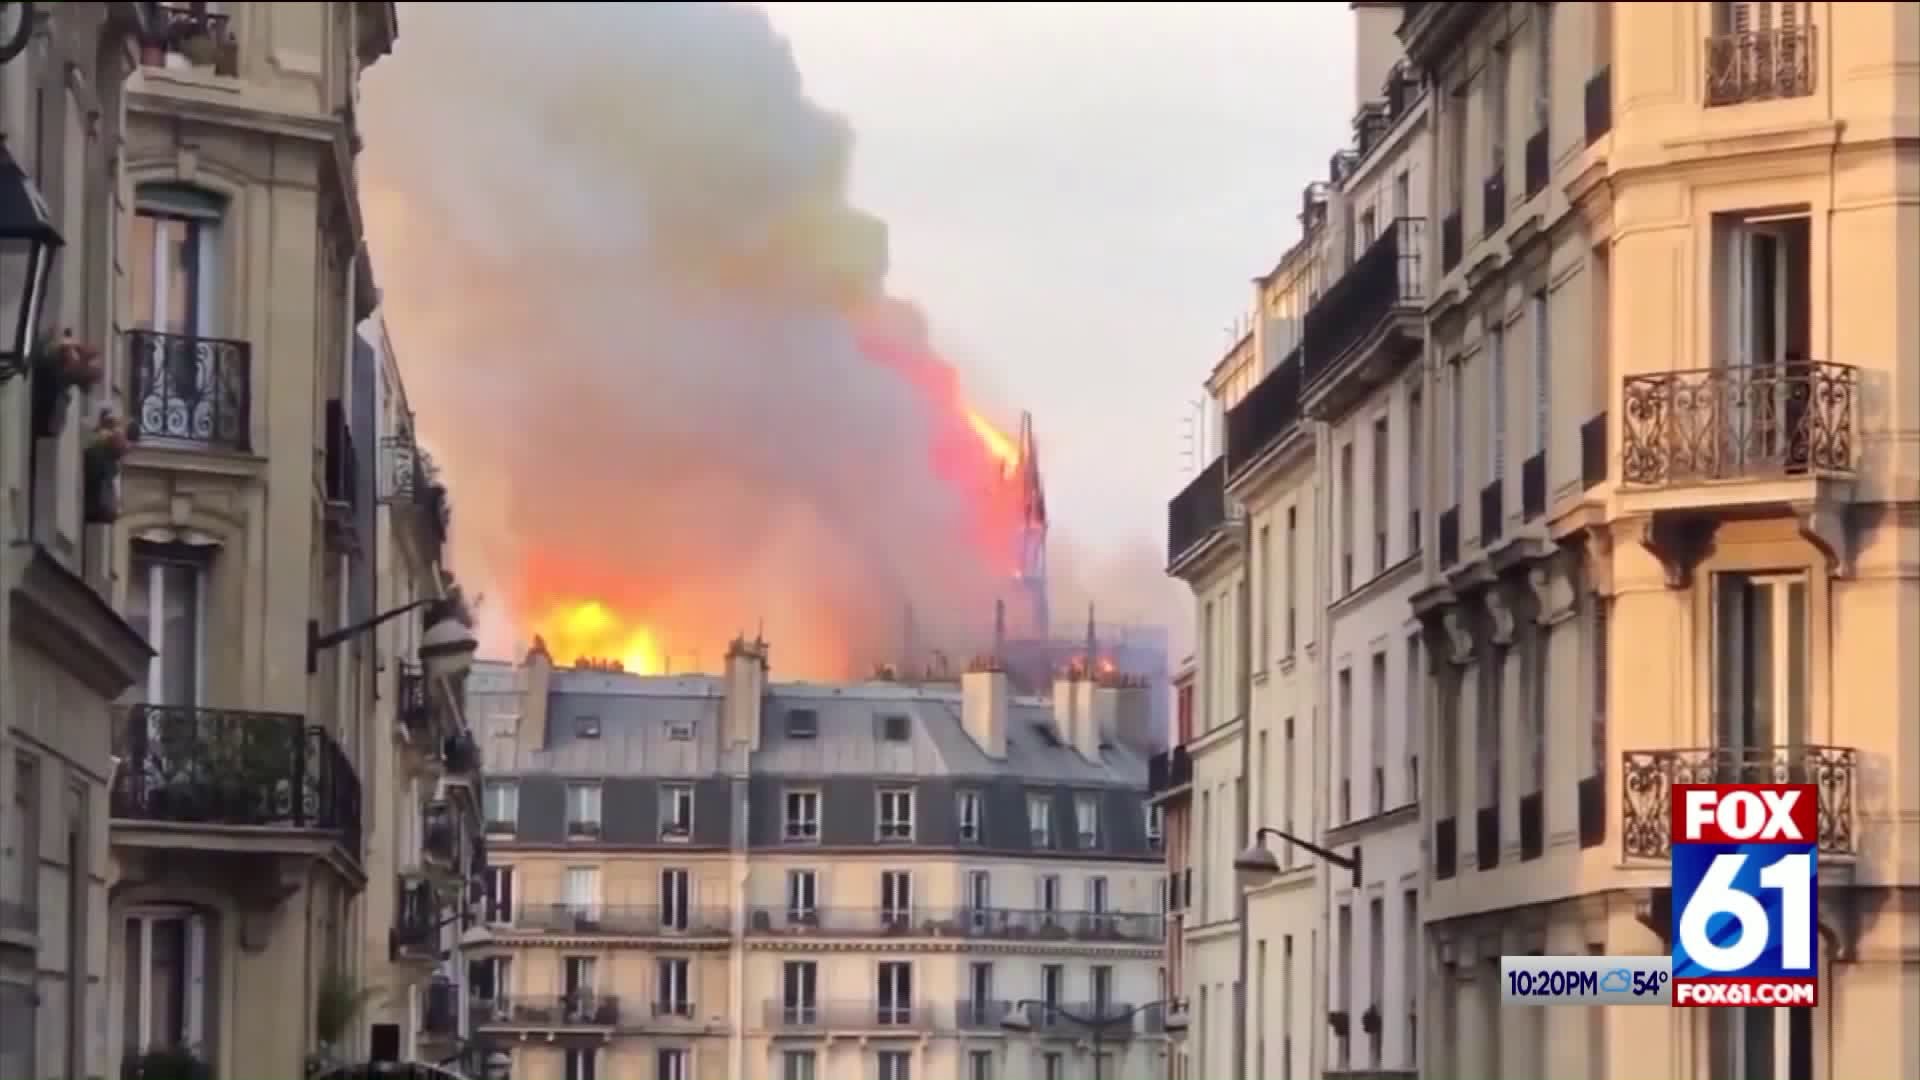 Onlookers describe horror at Notre Dame fire